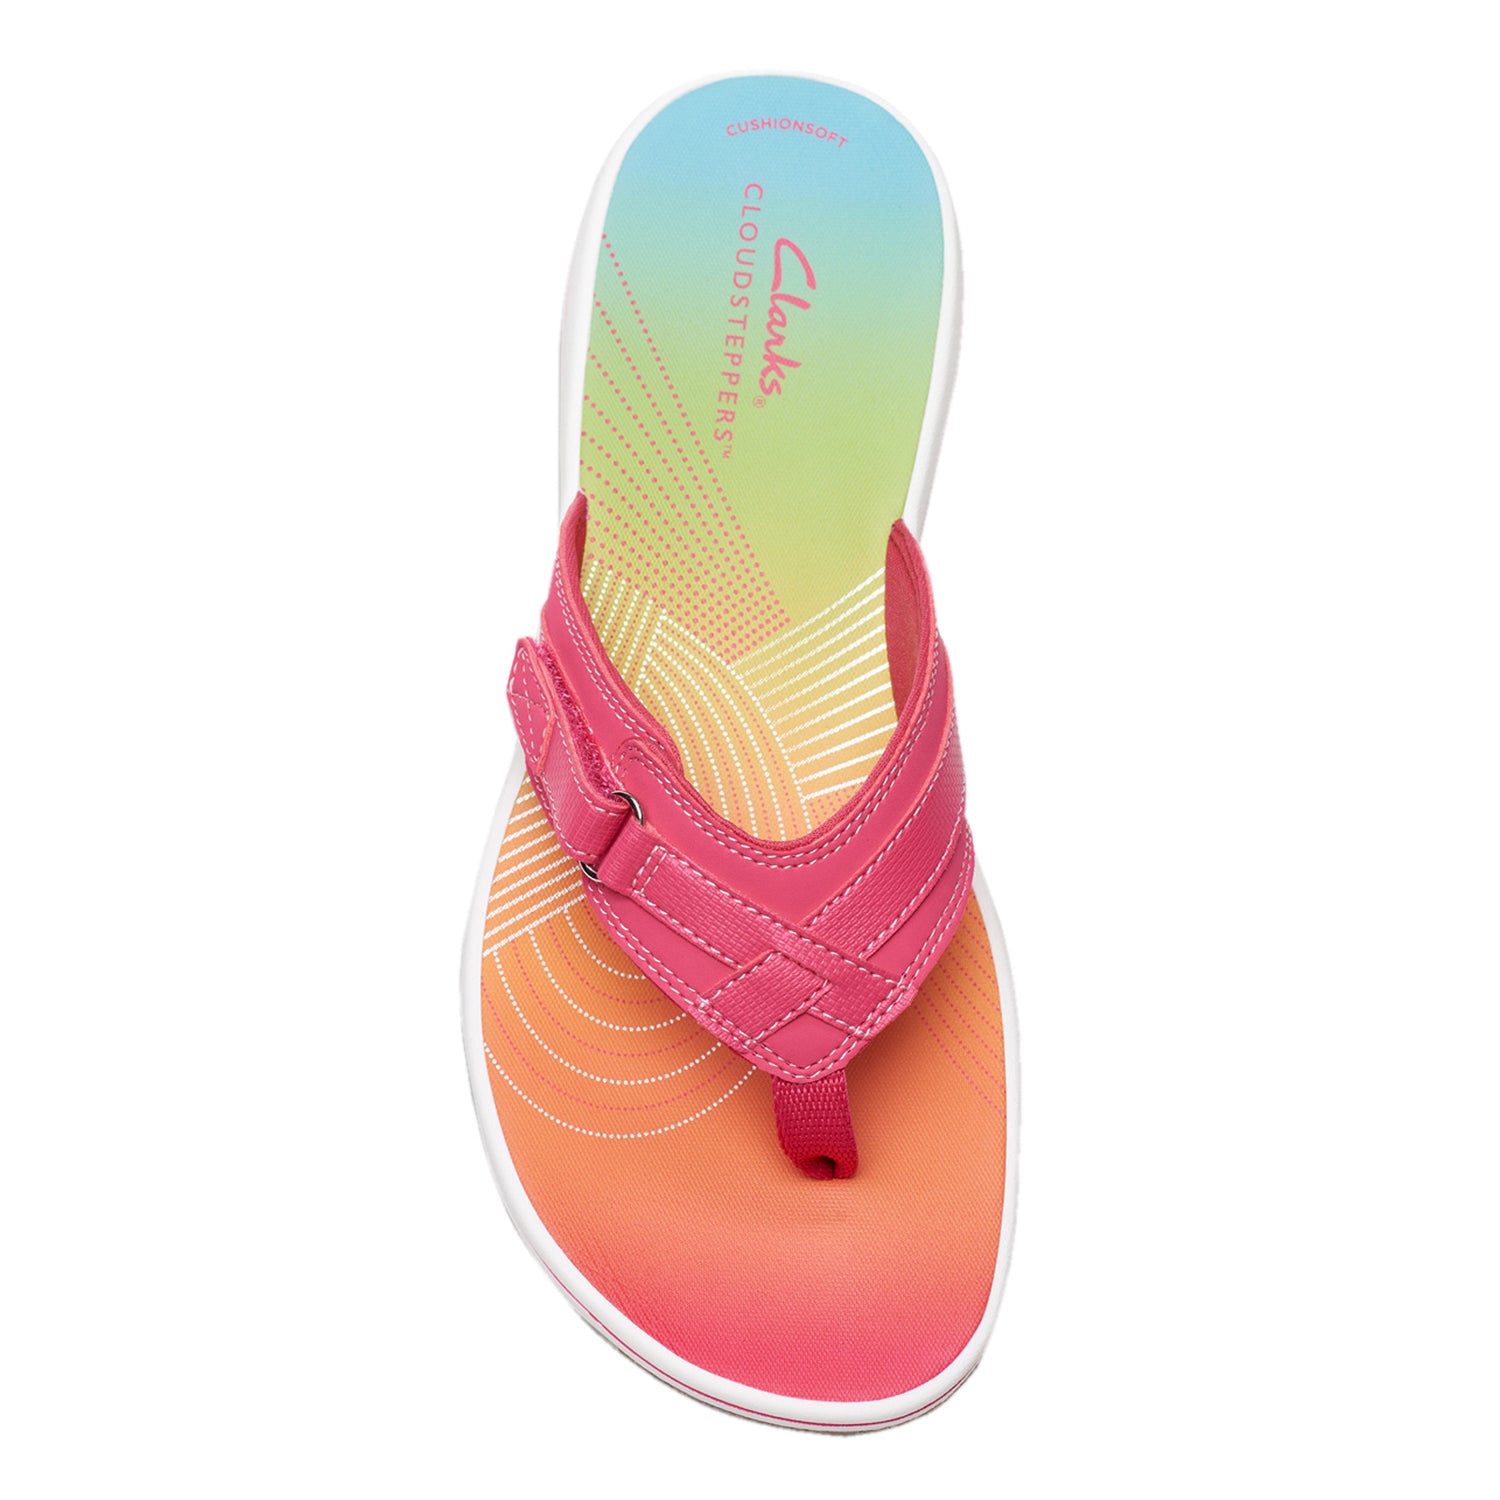 Clarks® Cloudsteppers Breeze Coral Women's Flip Flop Sandals